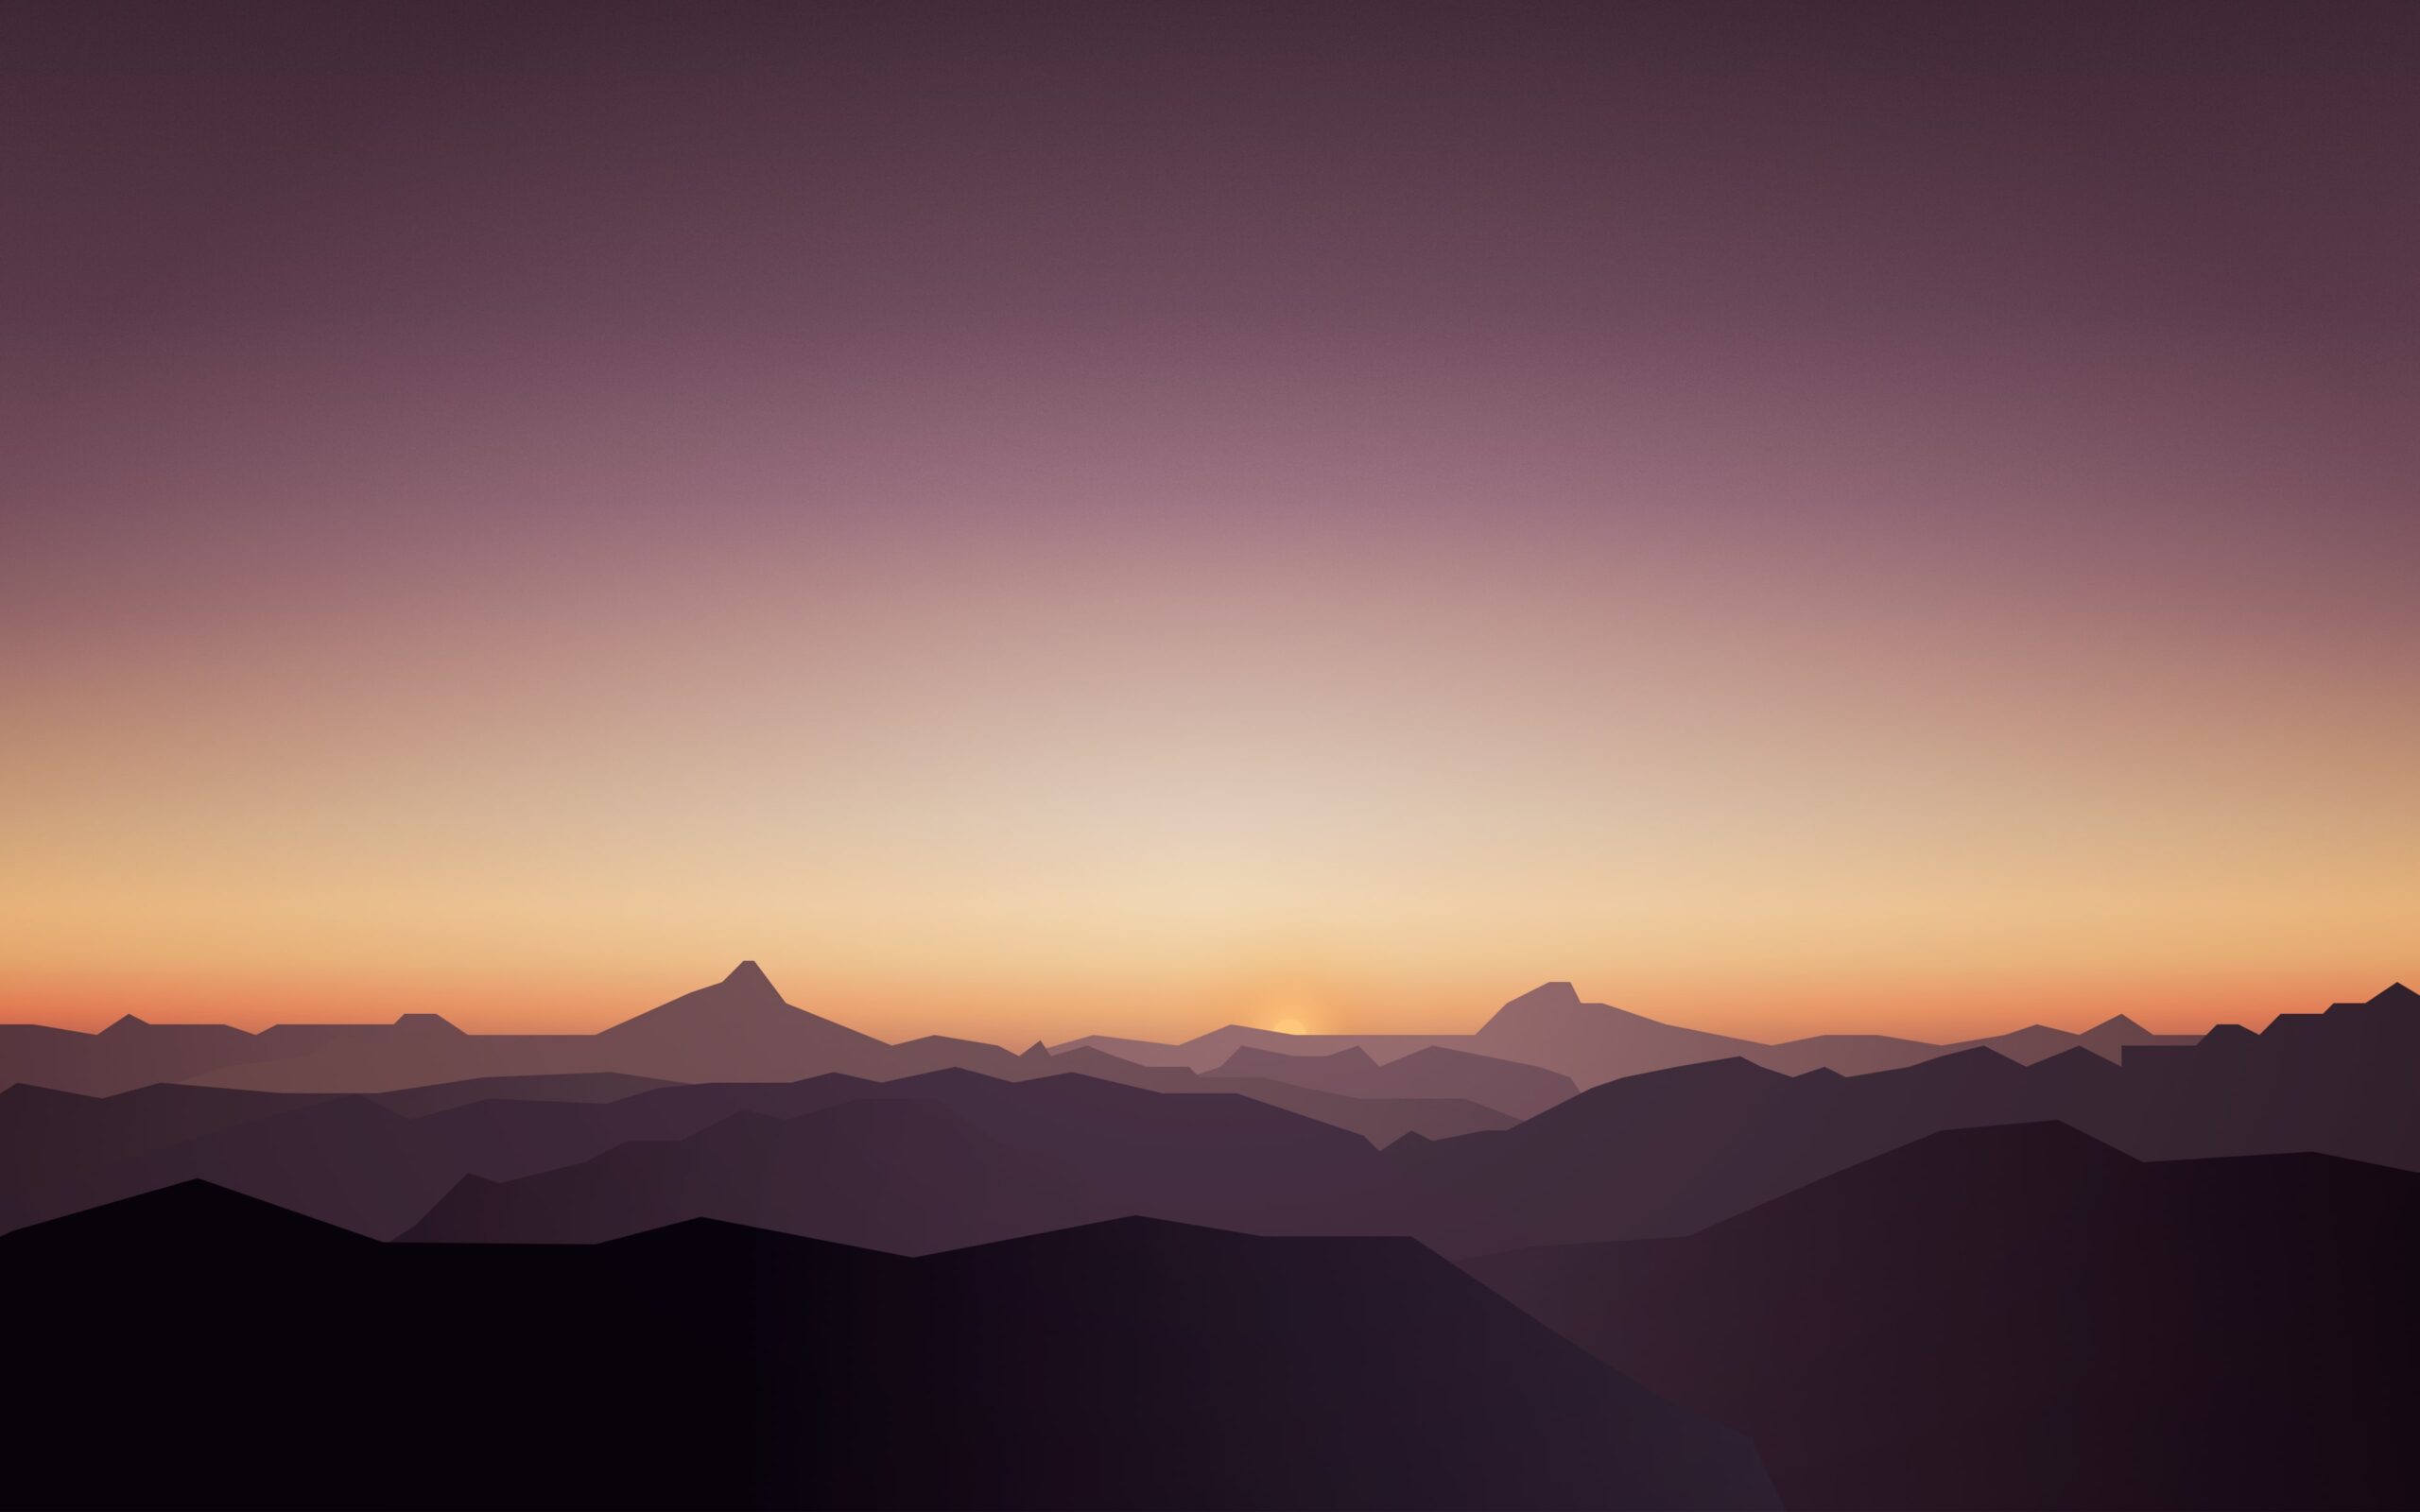 wallpapersden.com calm sunset mountains 3840x2400 min scaled